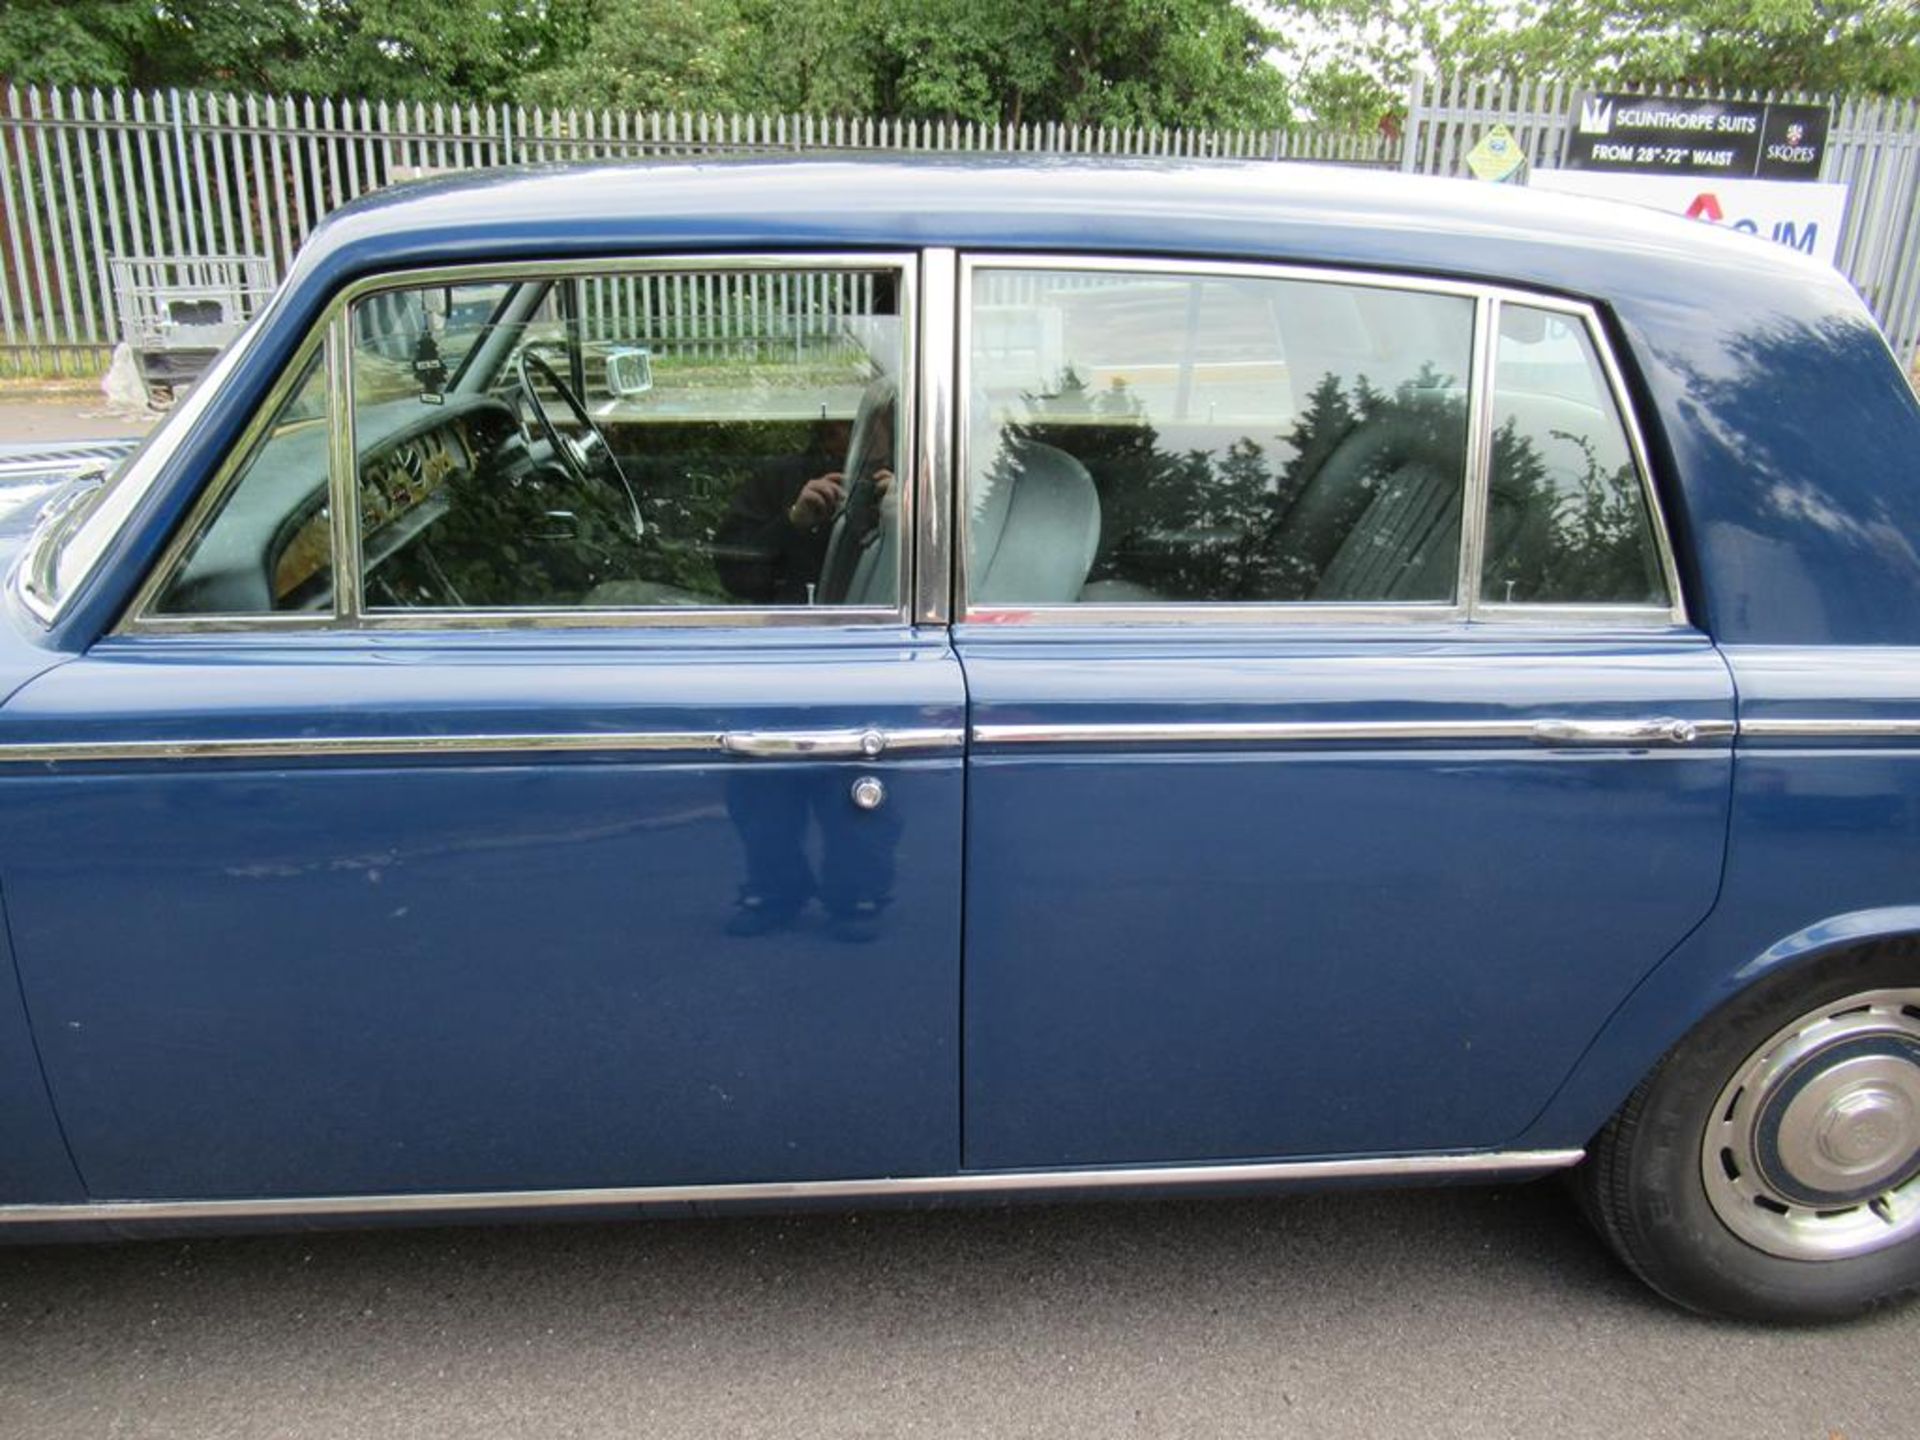 A Rolls Royce Silver Shadow Classic Car - Image 9 of 25